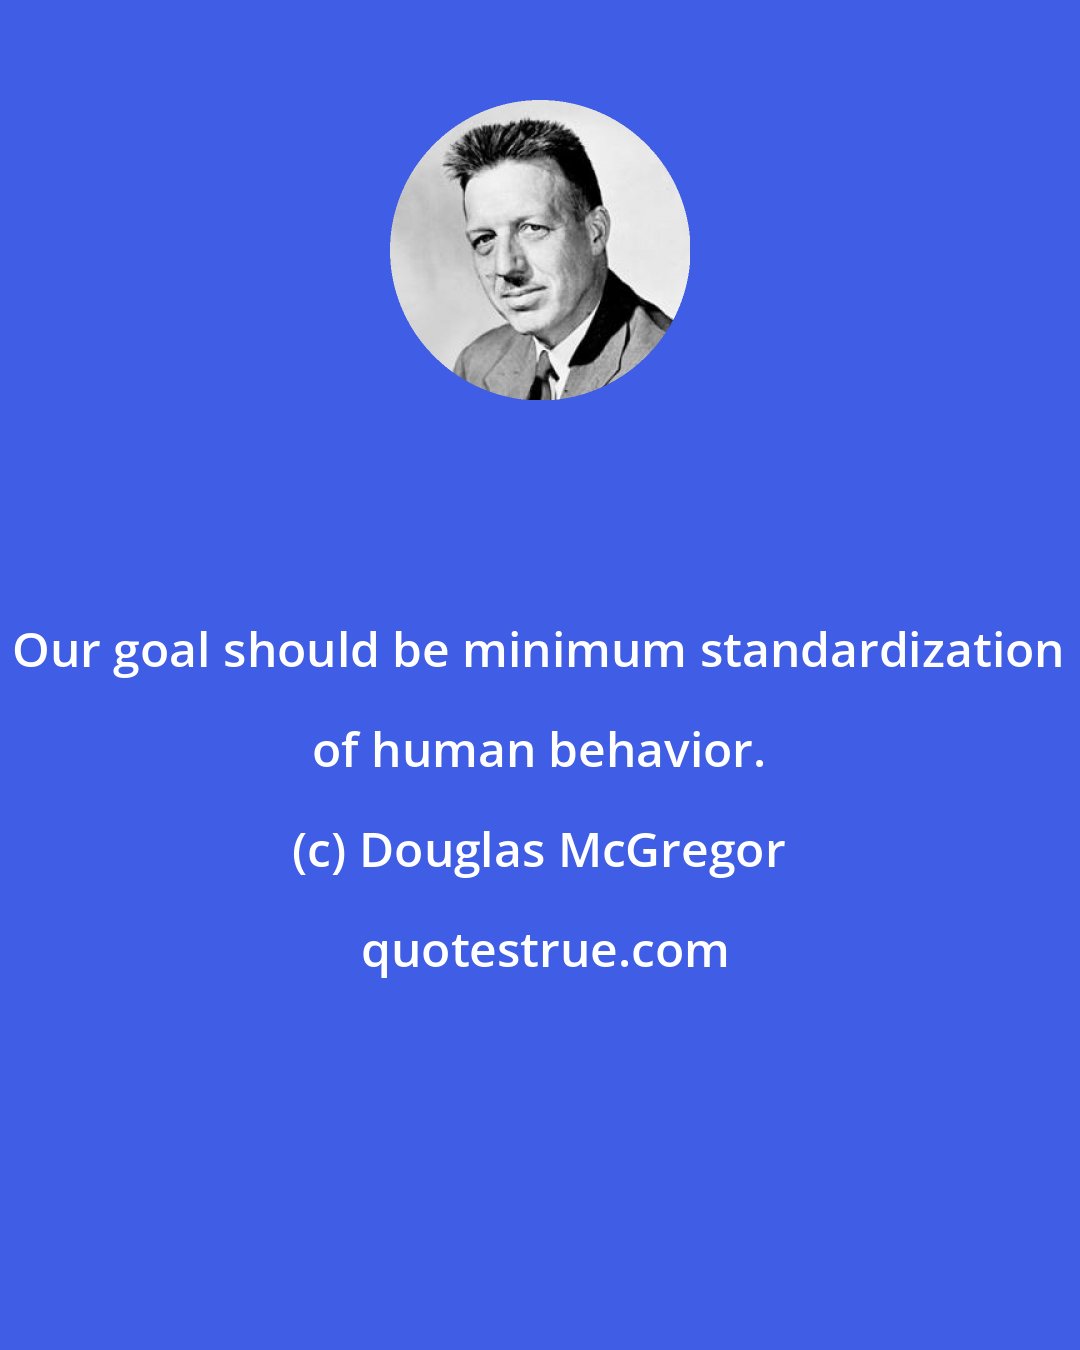 Douglas McGregor: Our goal should be minimum standardization of human behavior.